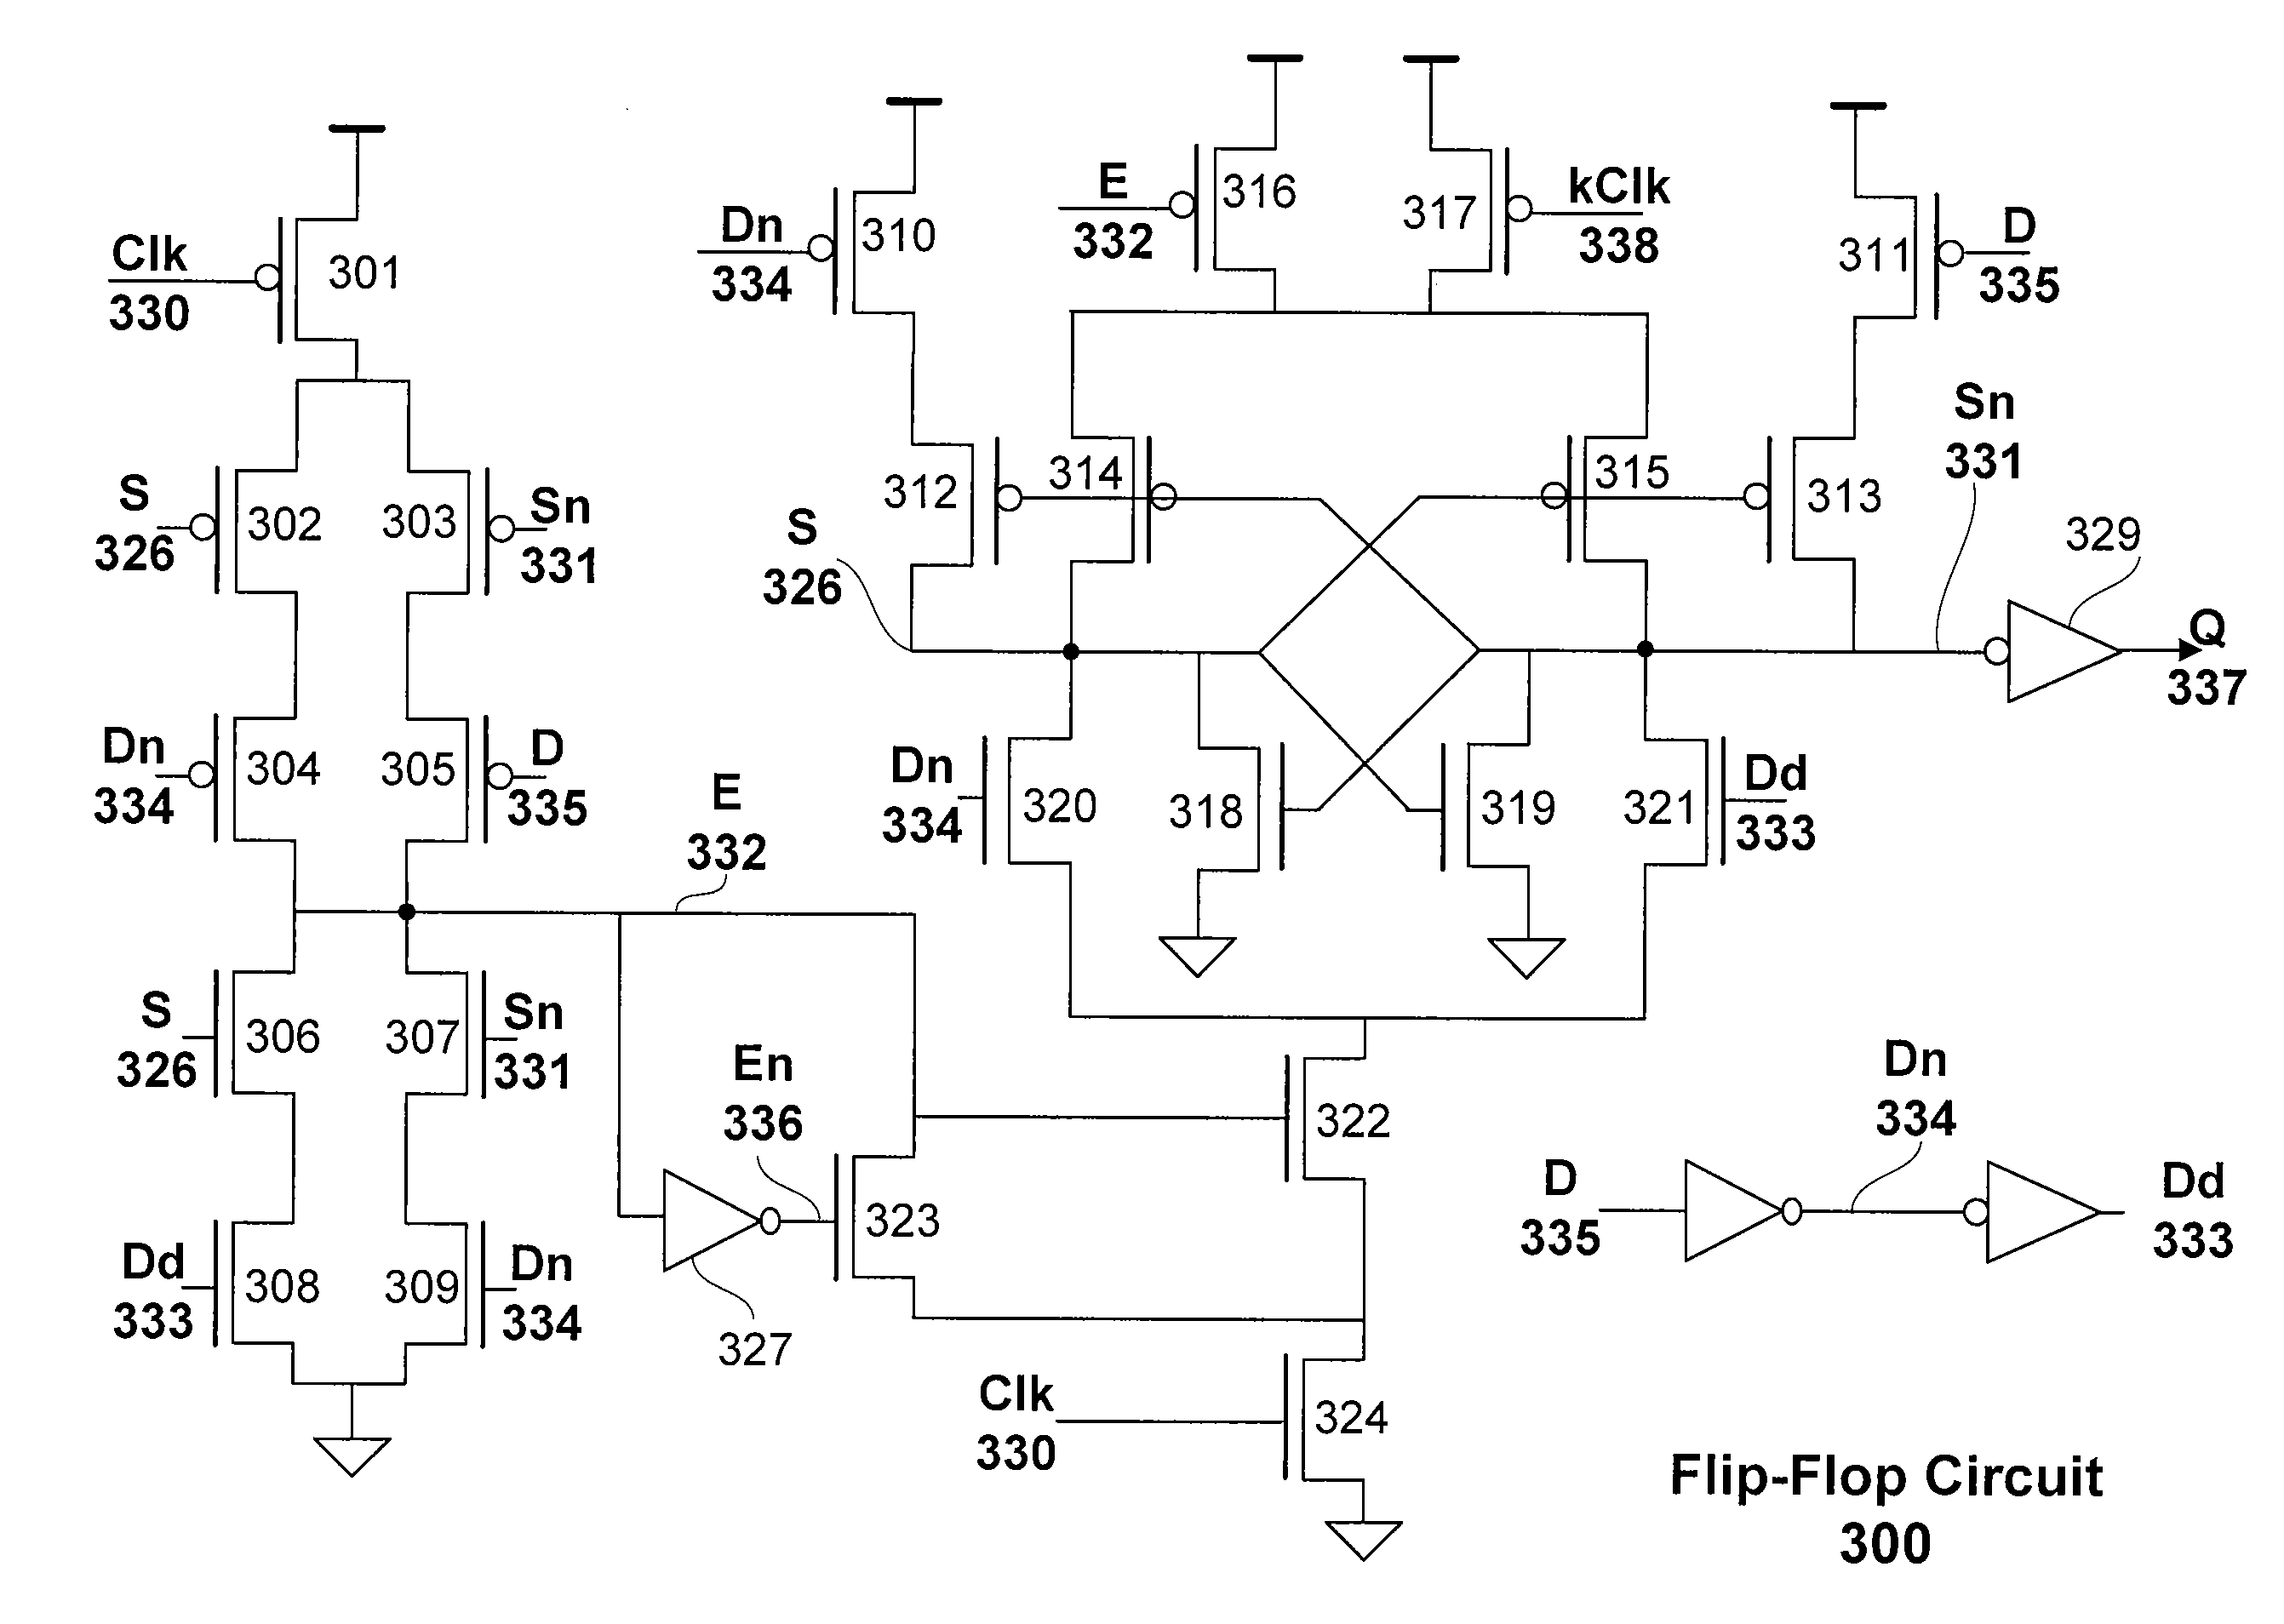 Single-trigger low-energy flip-flop circuit